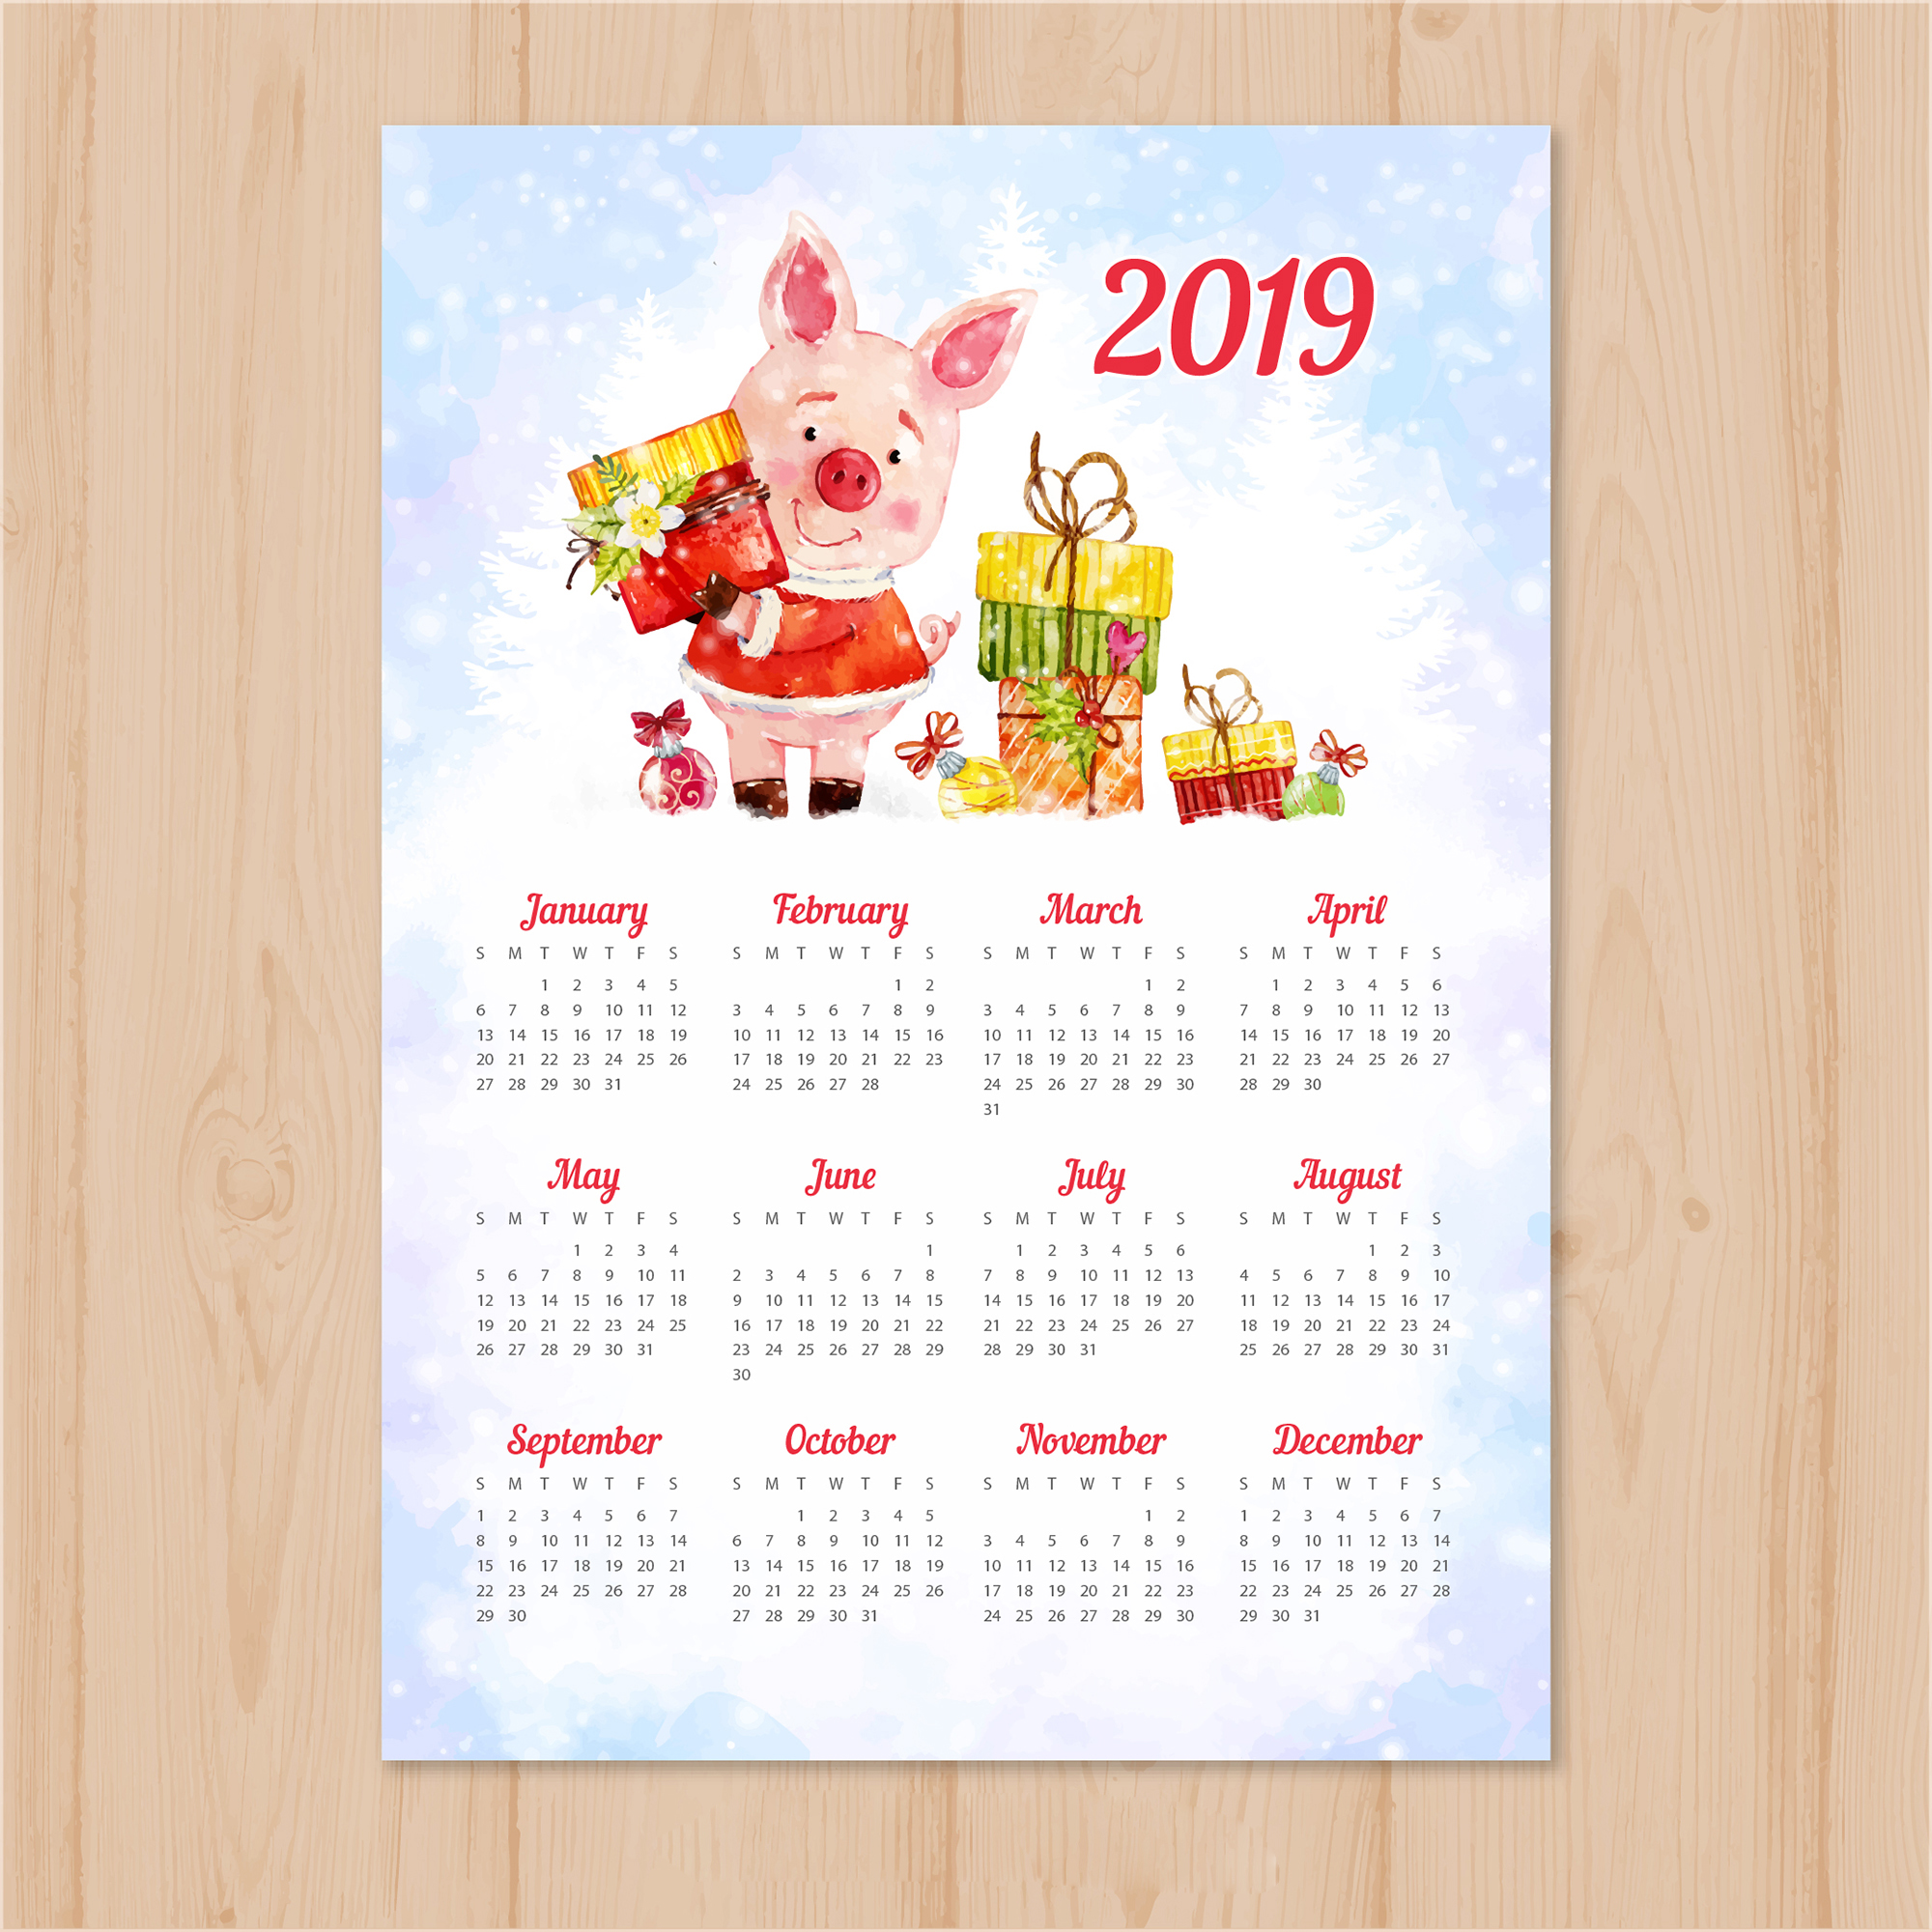 时尚简约的2019新年挂历日历矢量素材模板 Stylish Minimalist 2019 New Year Calendar Calendar Vector Material Template插图5